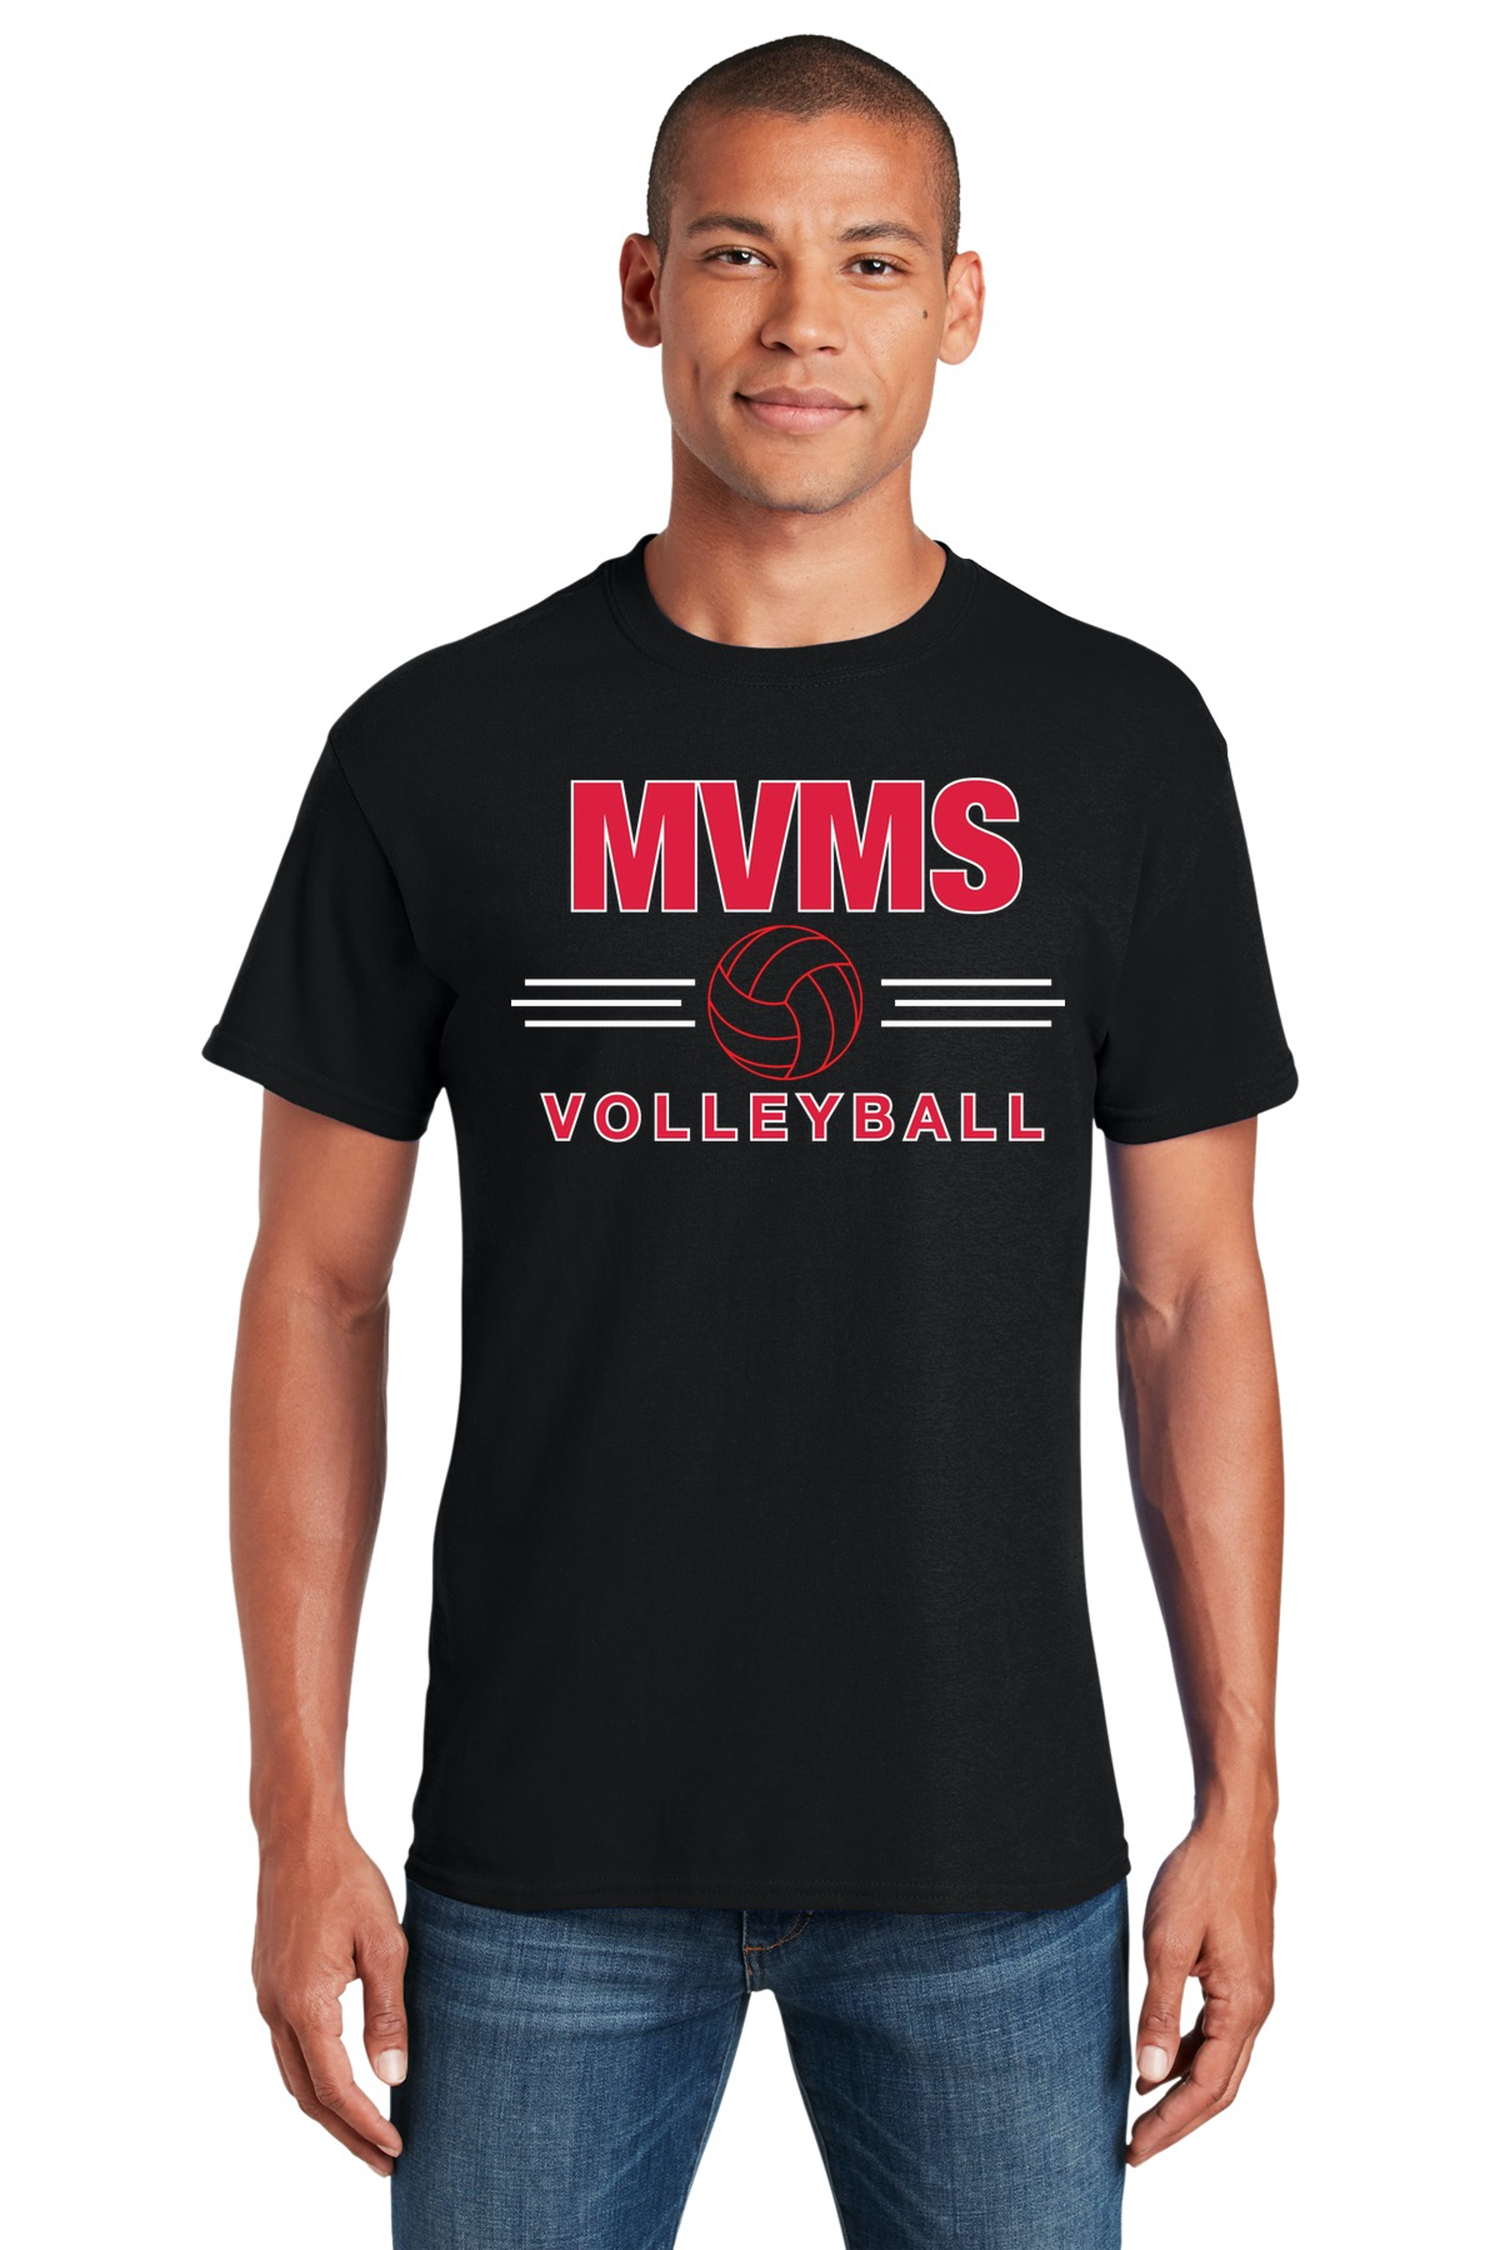 MVMS Volleyball Heavy Cotton Tee Shirt